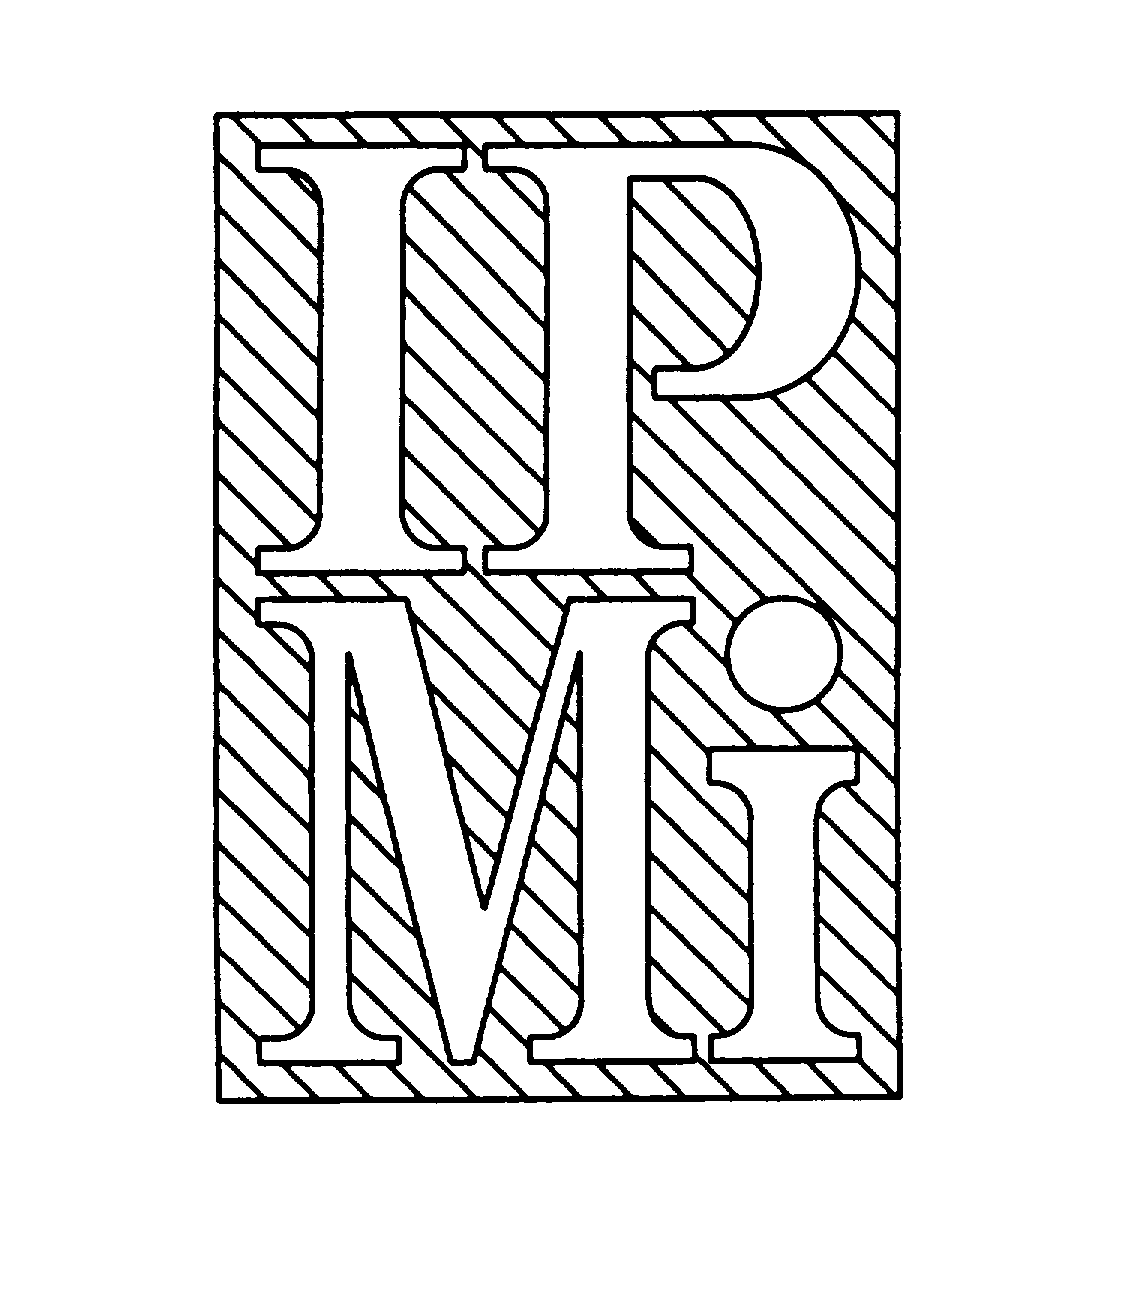 Trademark Logo IPMI